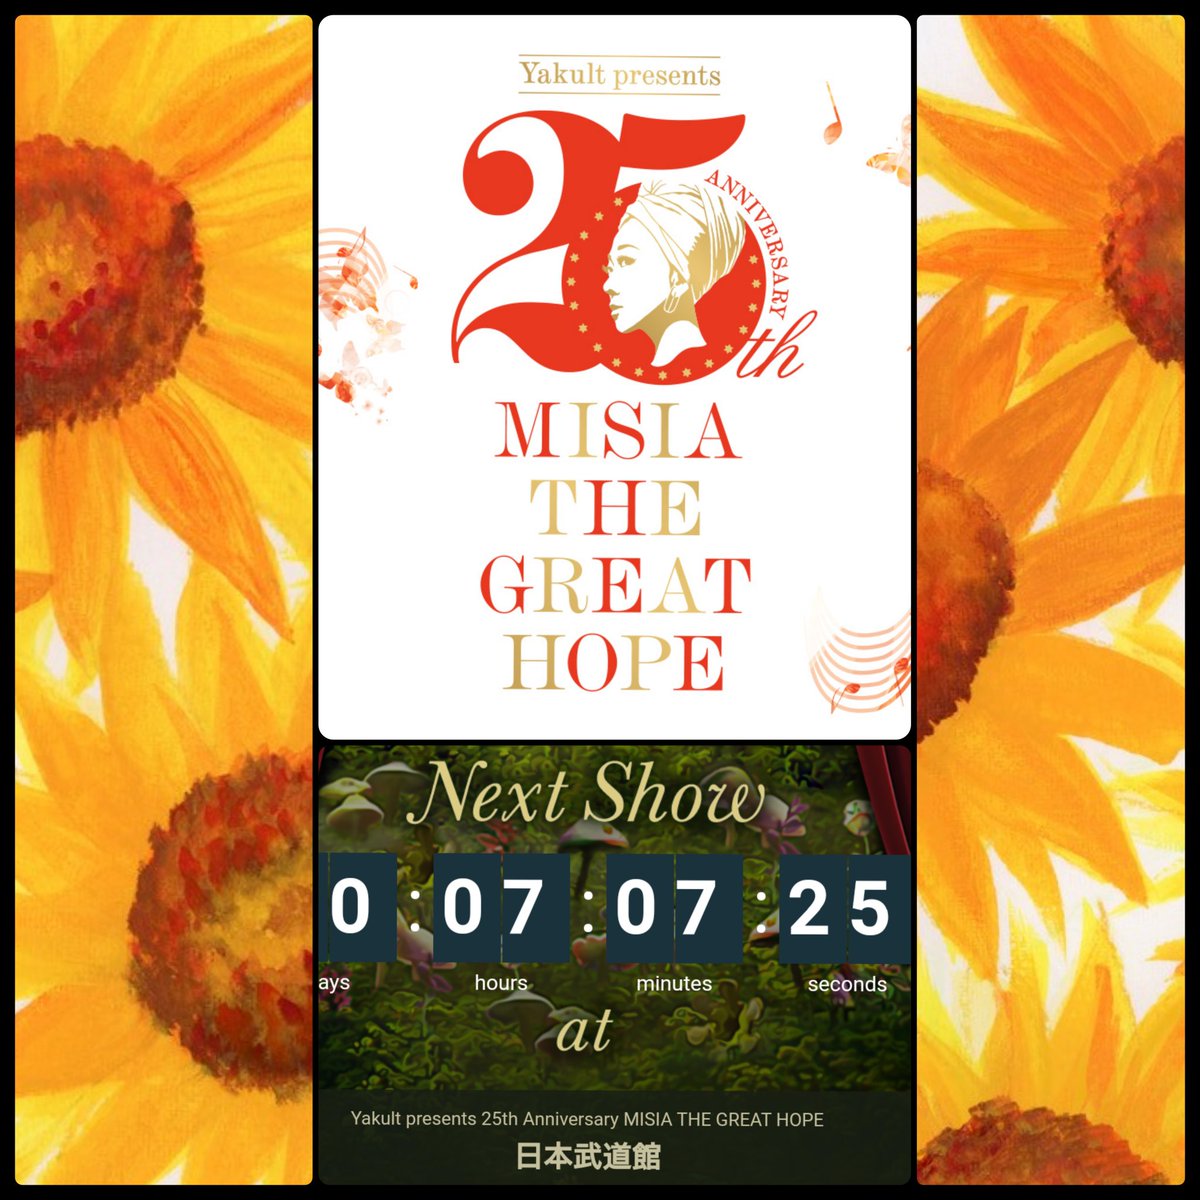 25th Anniversary
MISIA THE GREAT HOPE

#MISIA
#25thAnniversaryMISIATHEGREATHOPE
#Yakultpresents